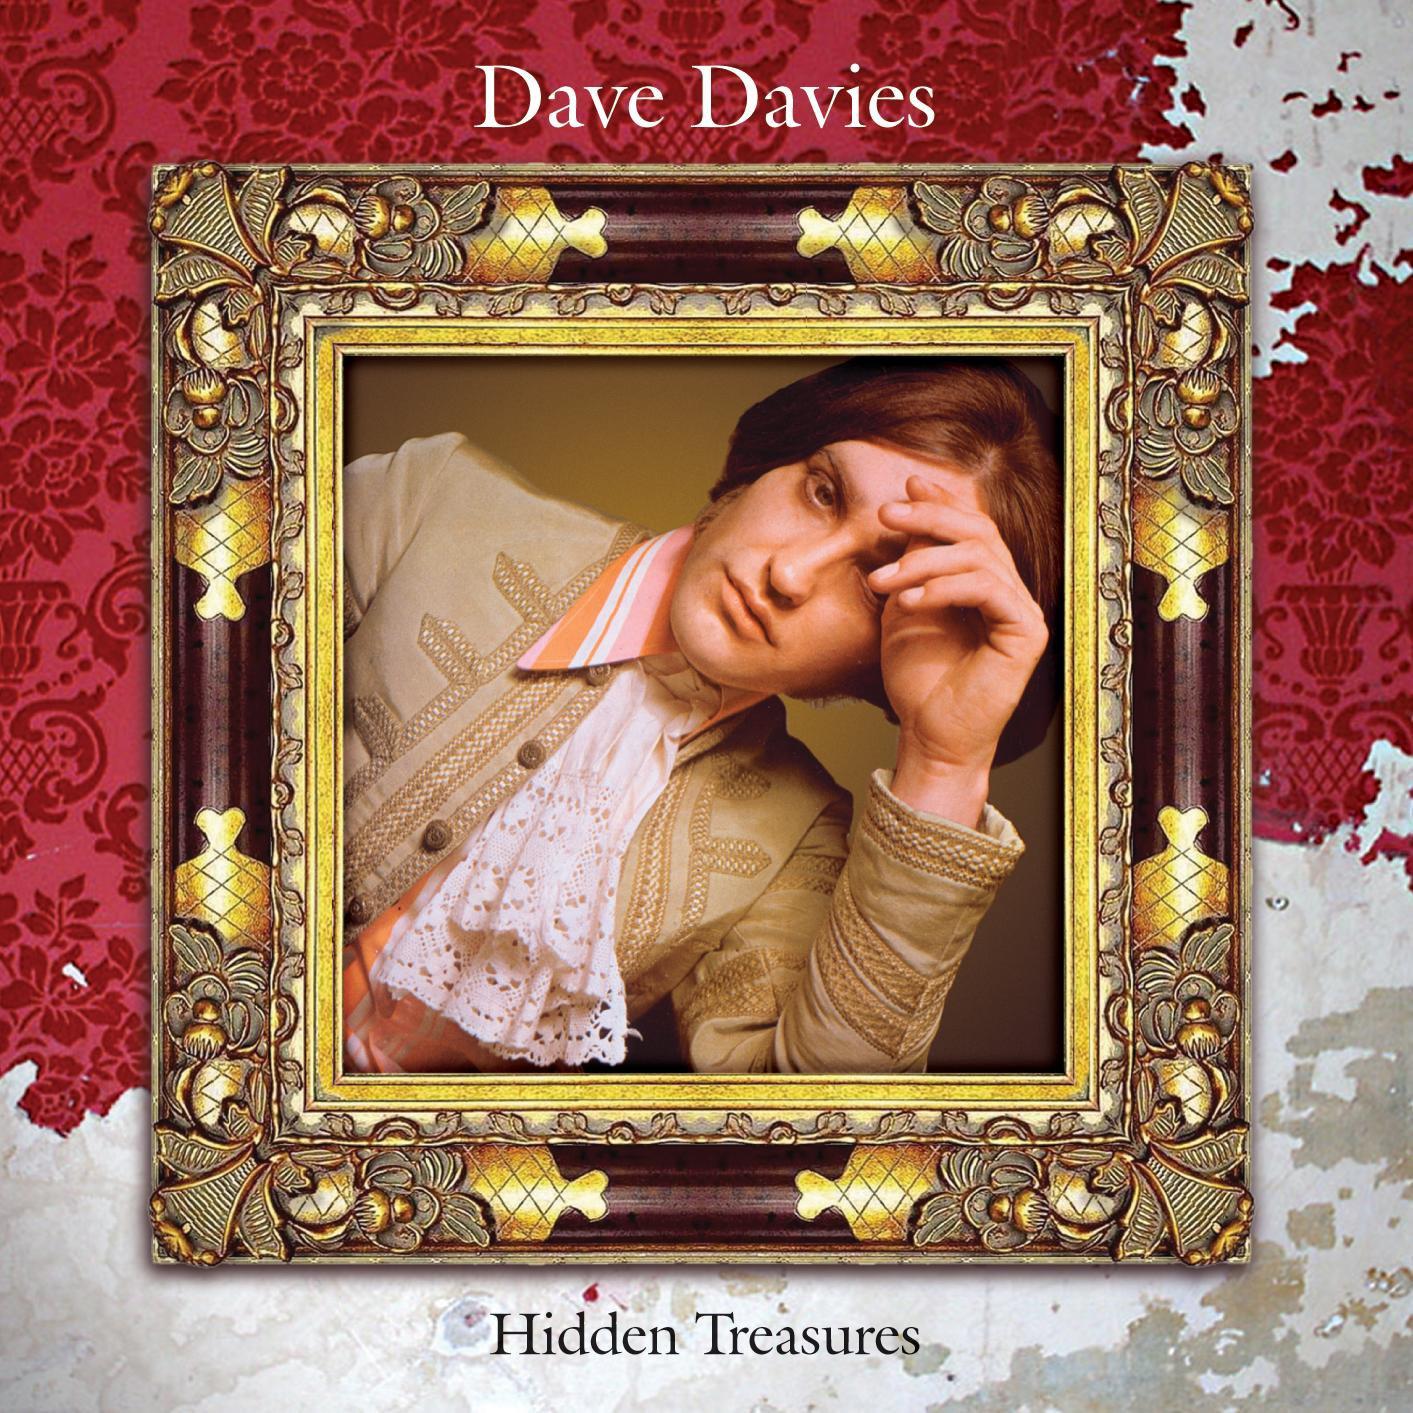 Dave Davies - Hold My Hand (Demo Version)